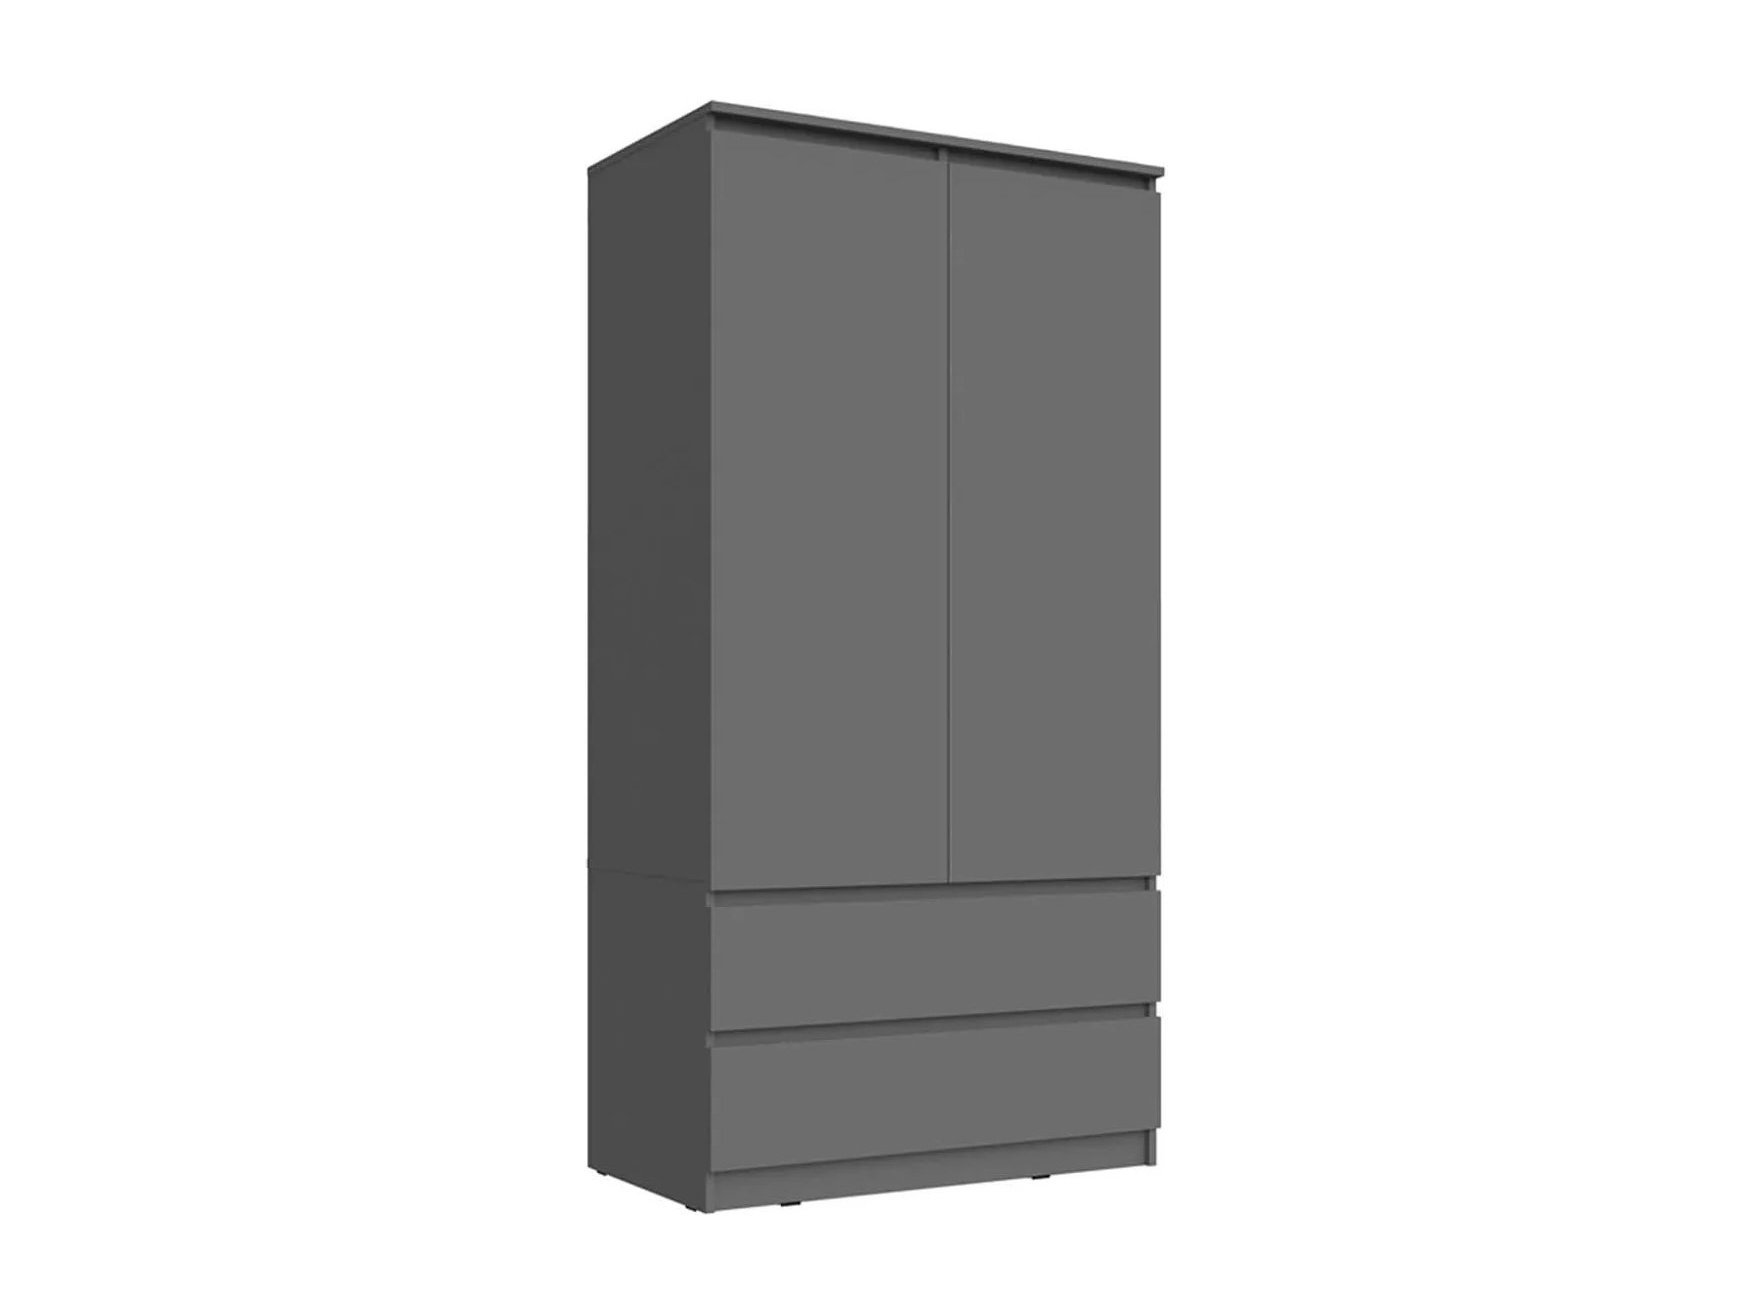 Челси Шкаф 2-х створчатый комбинированный (Графит, Графит) Графит, Черный, ЛДСП челси шкаф 2 х створчатый комбинированный антресоль к шкафу 900 графит графит графит черный лдсп